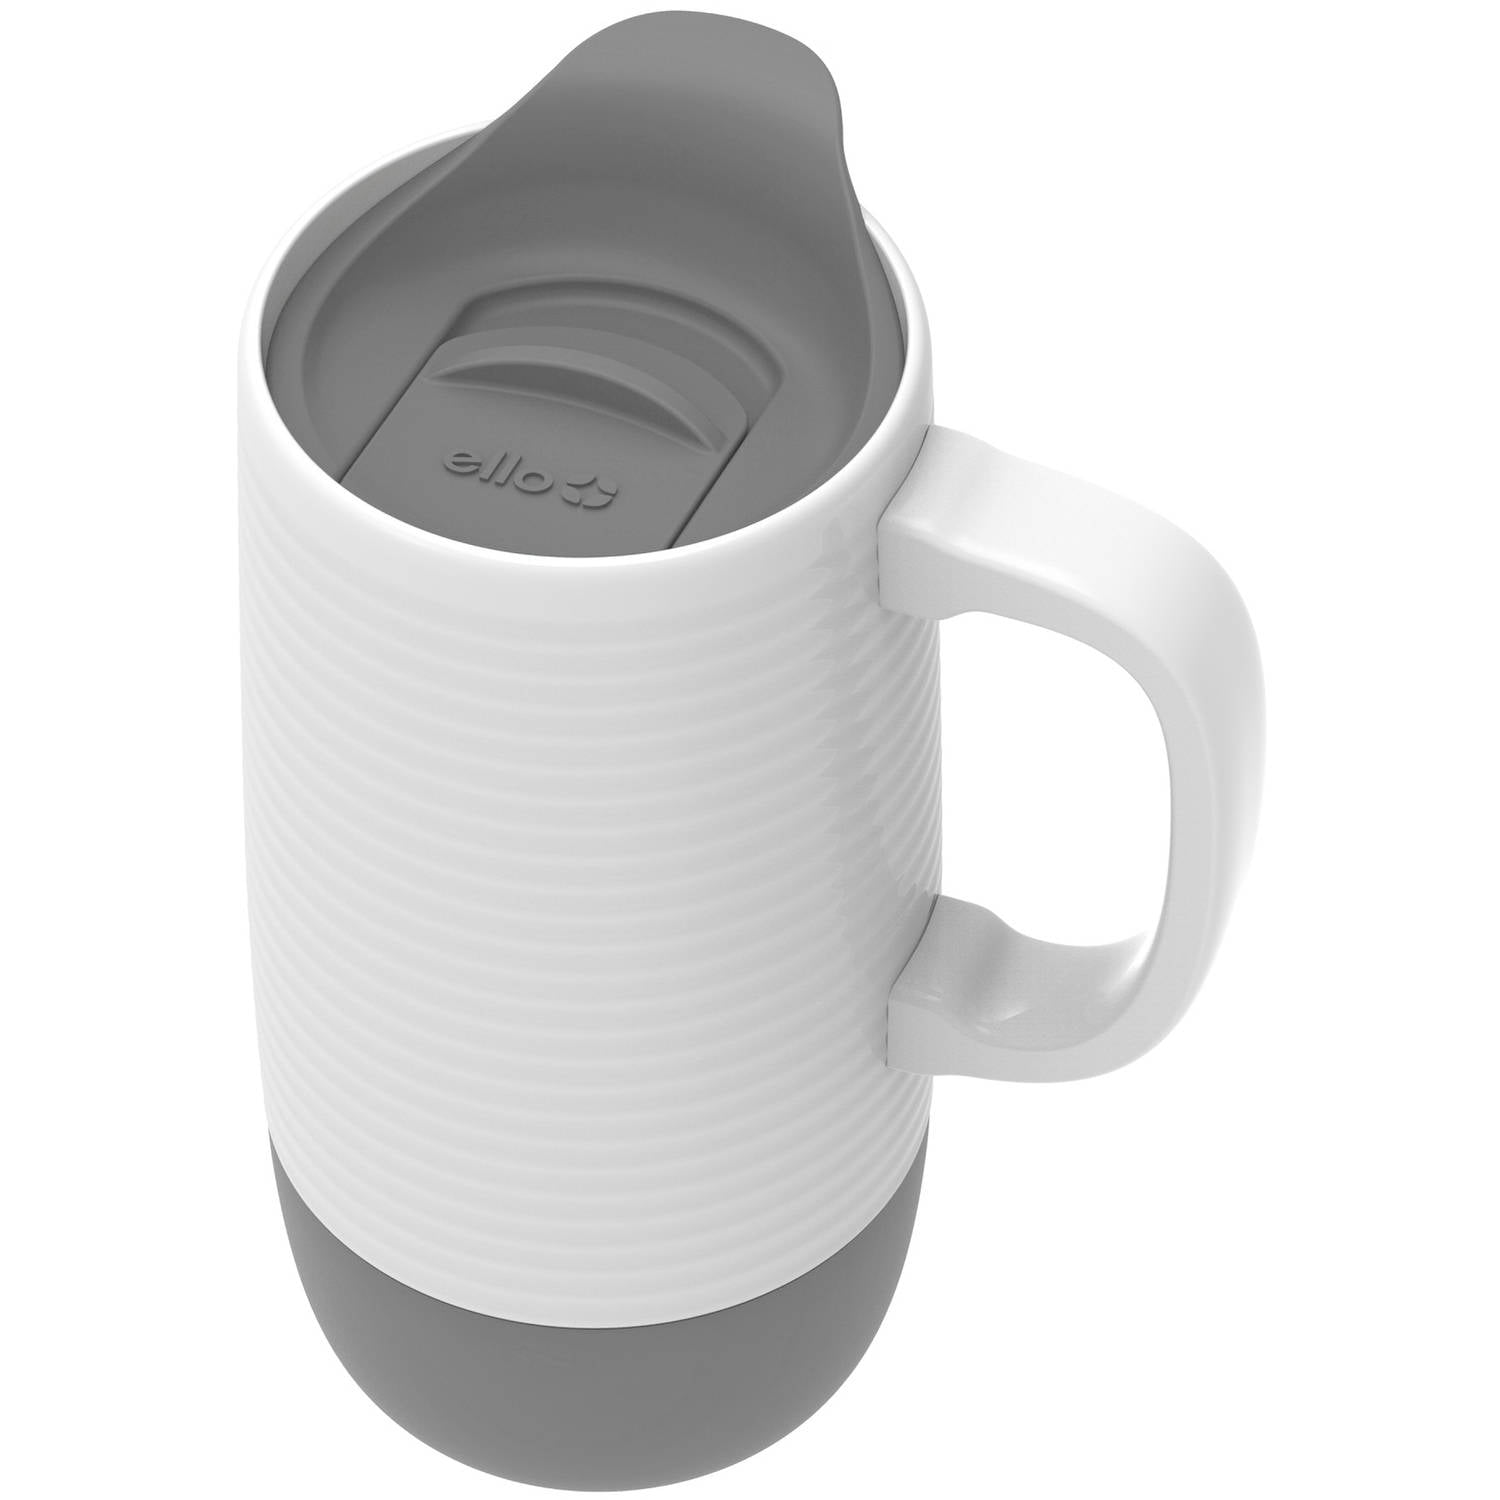 Ello Coffee Tea Drink Travel Mug Cup Gray Stripes Ceramic Tumbler